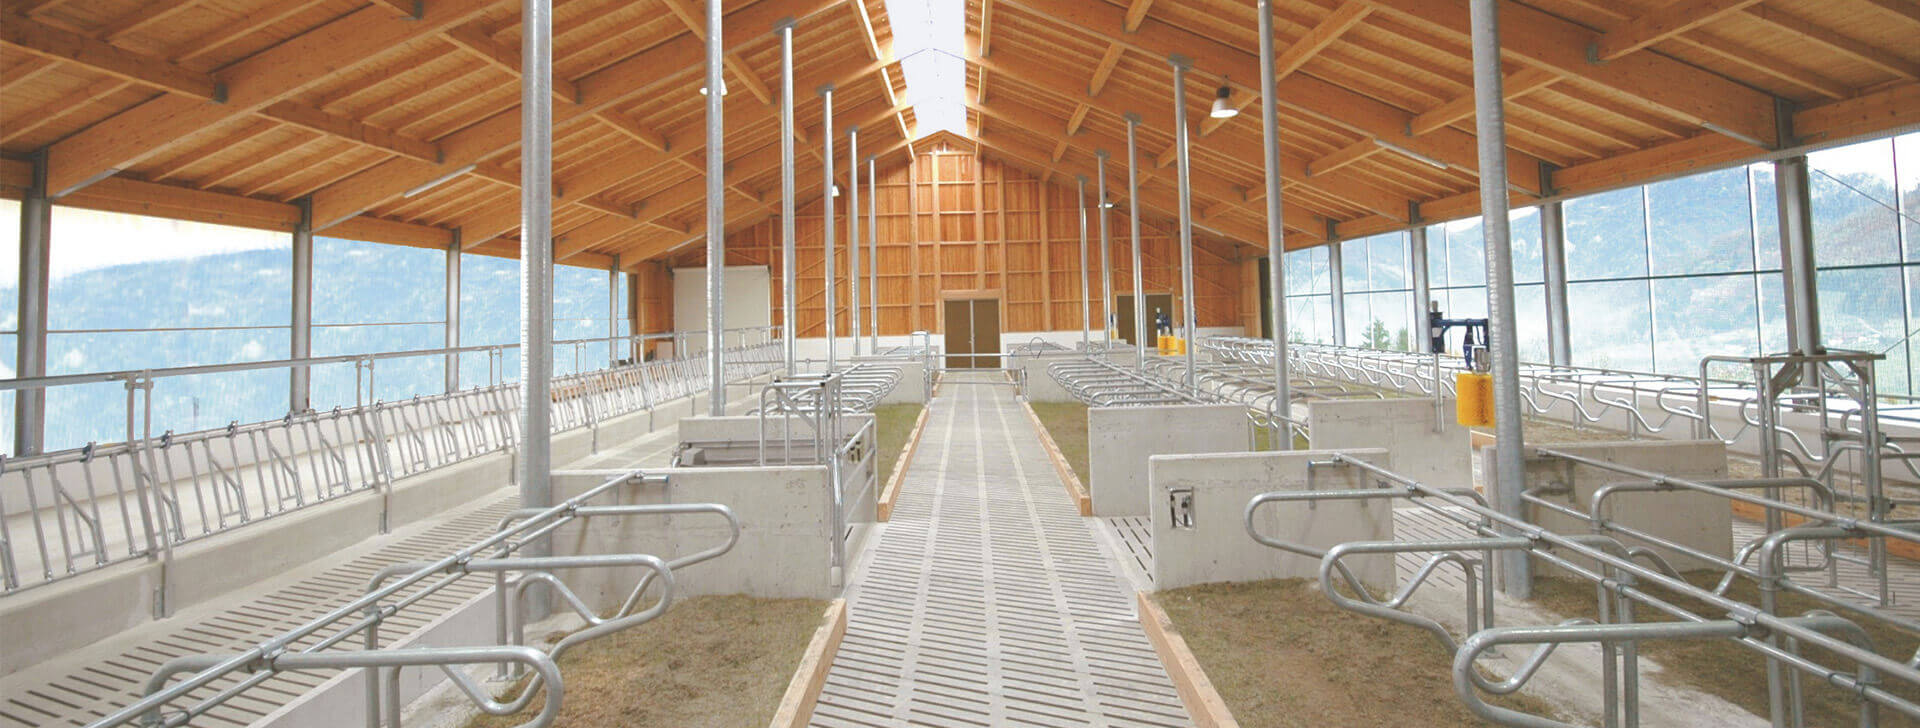 Livestock Barns - WOLF System